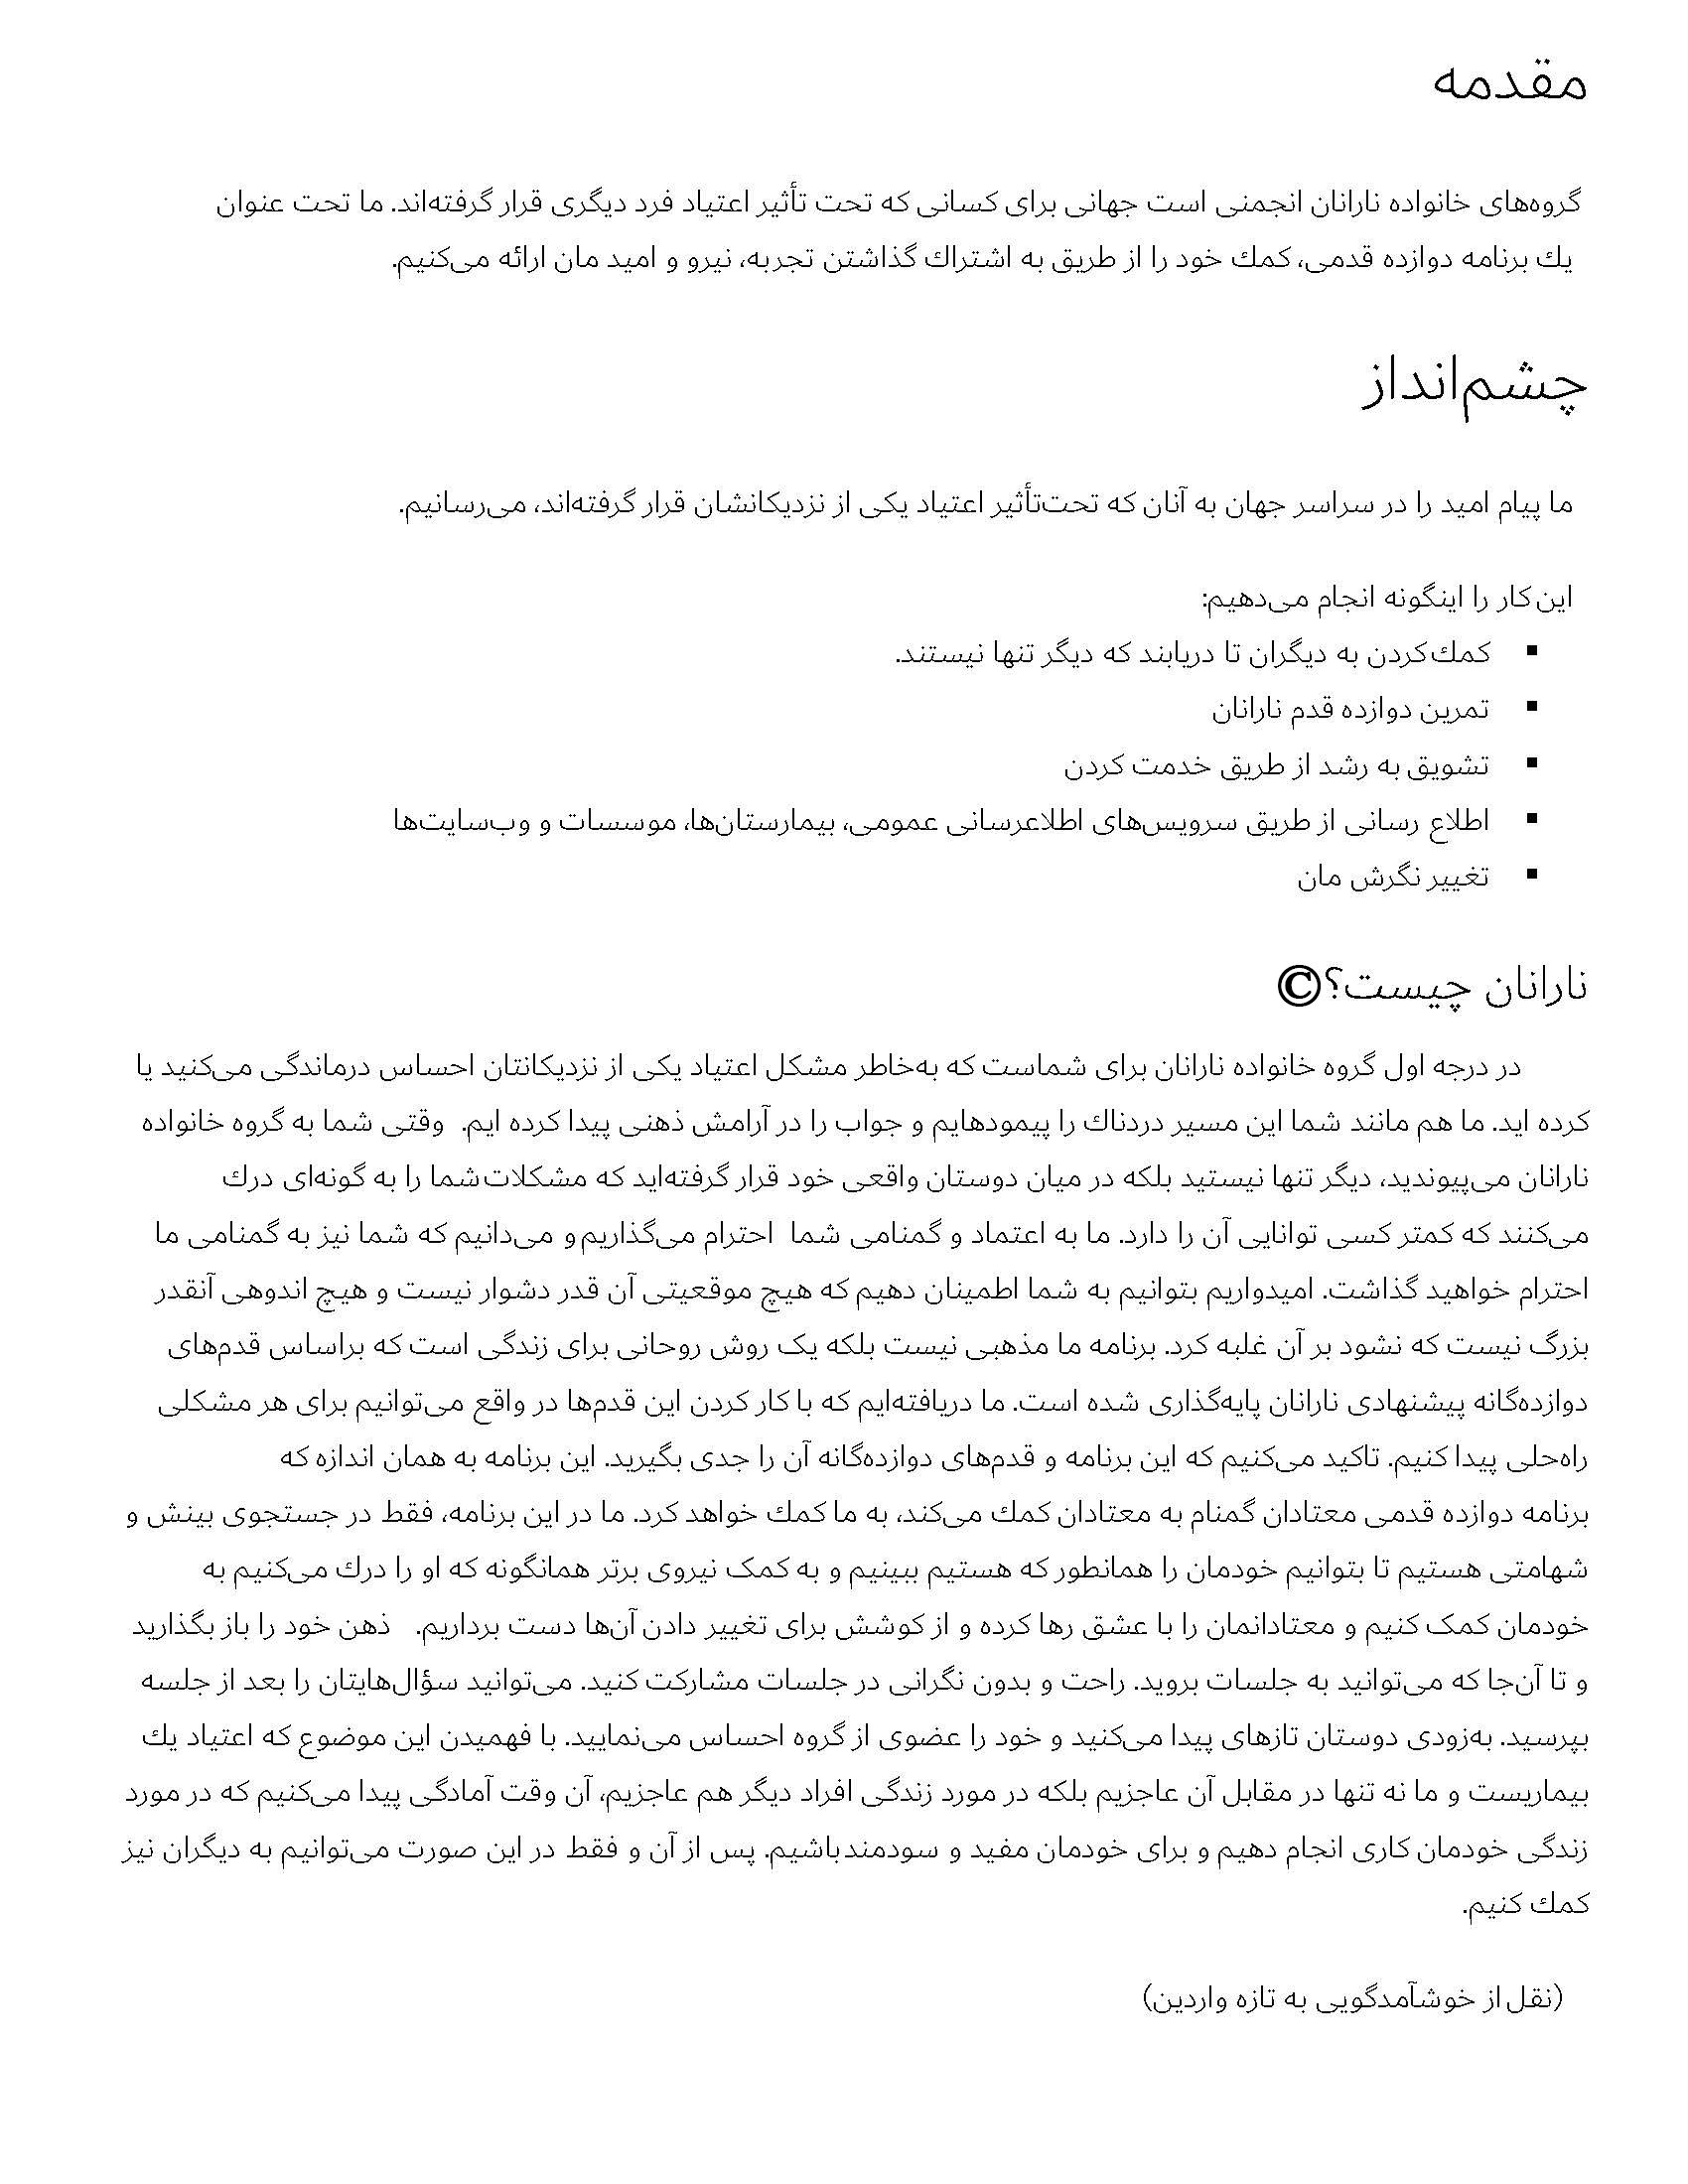 NAr-Anon Iran_Page_1 copyright.jpg